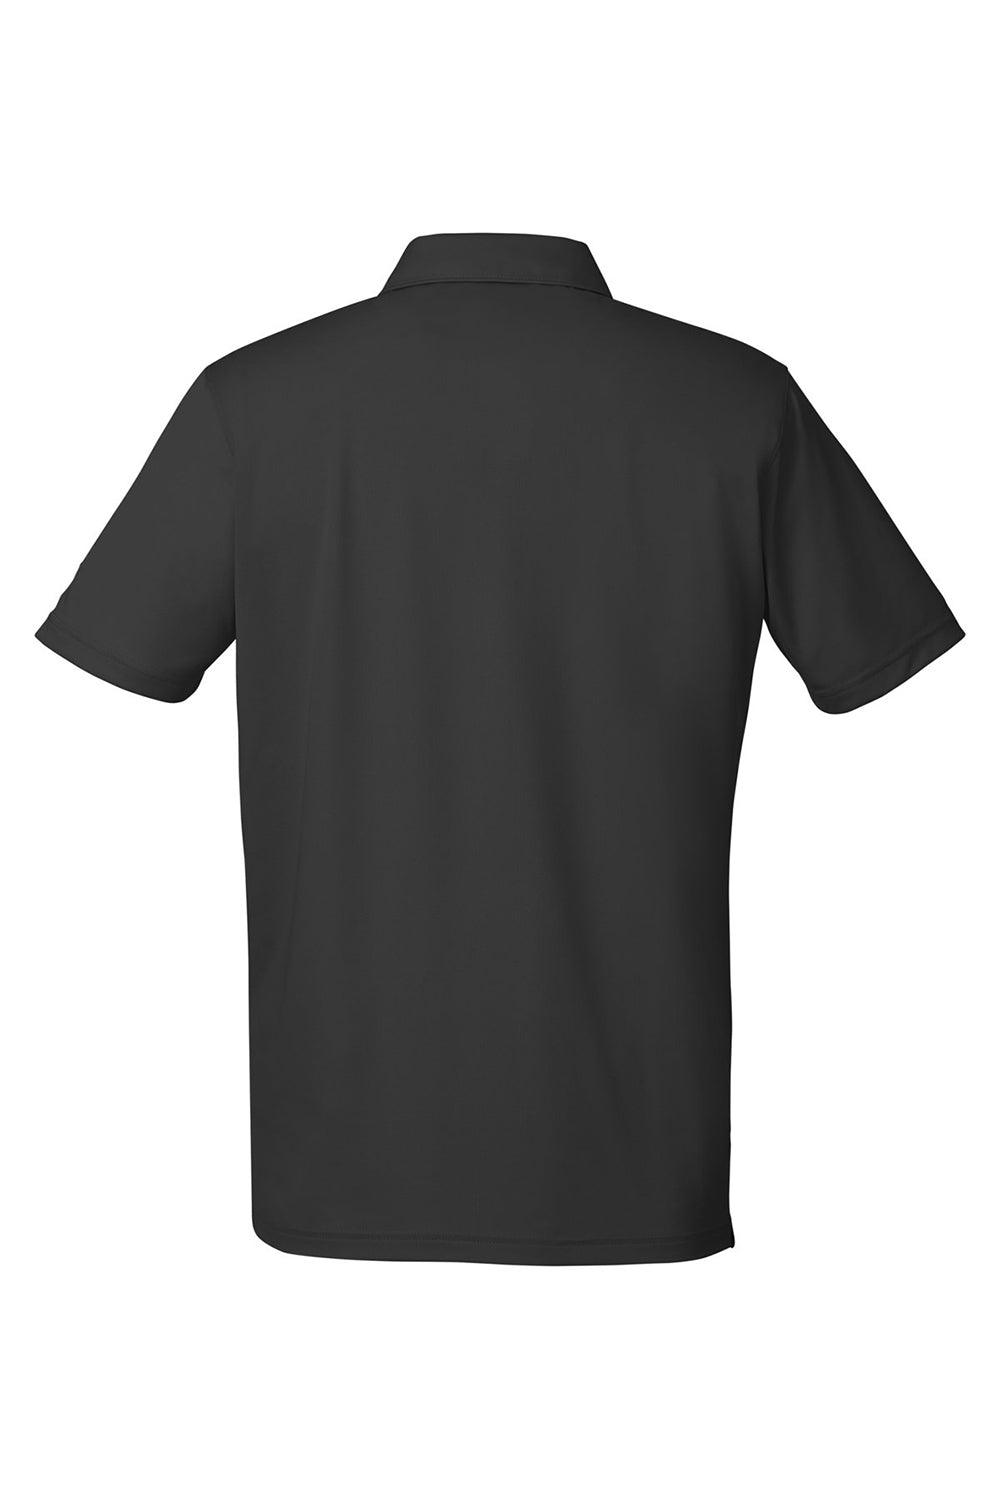 Puma 599120 Mens Gamer Short Sleeve Polo Shirt Black Flat Back